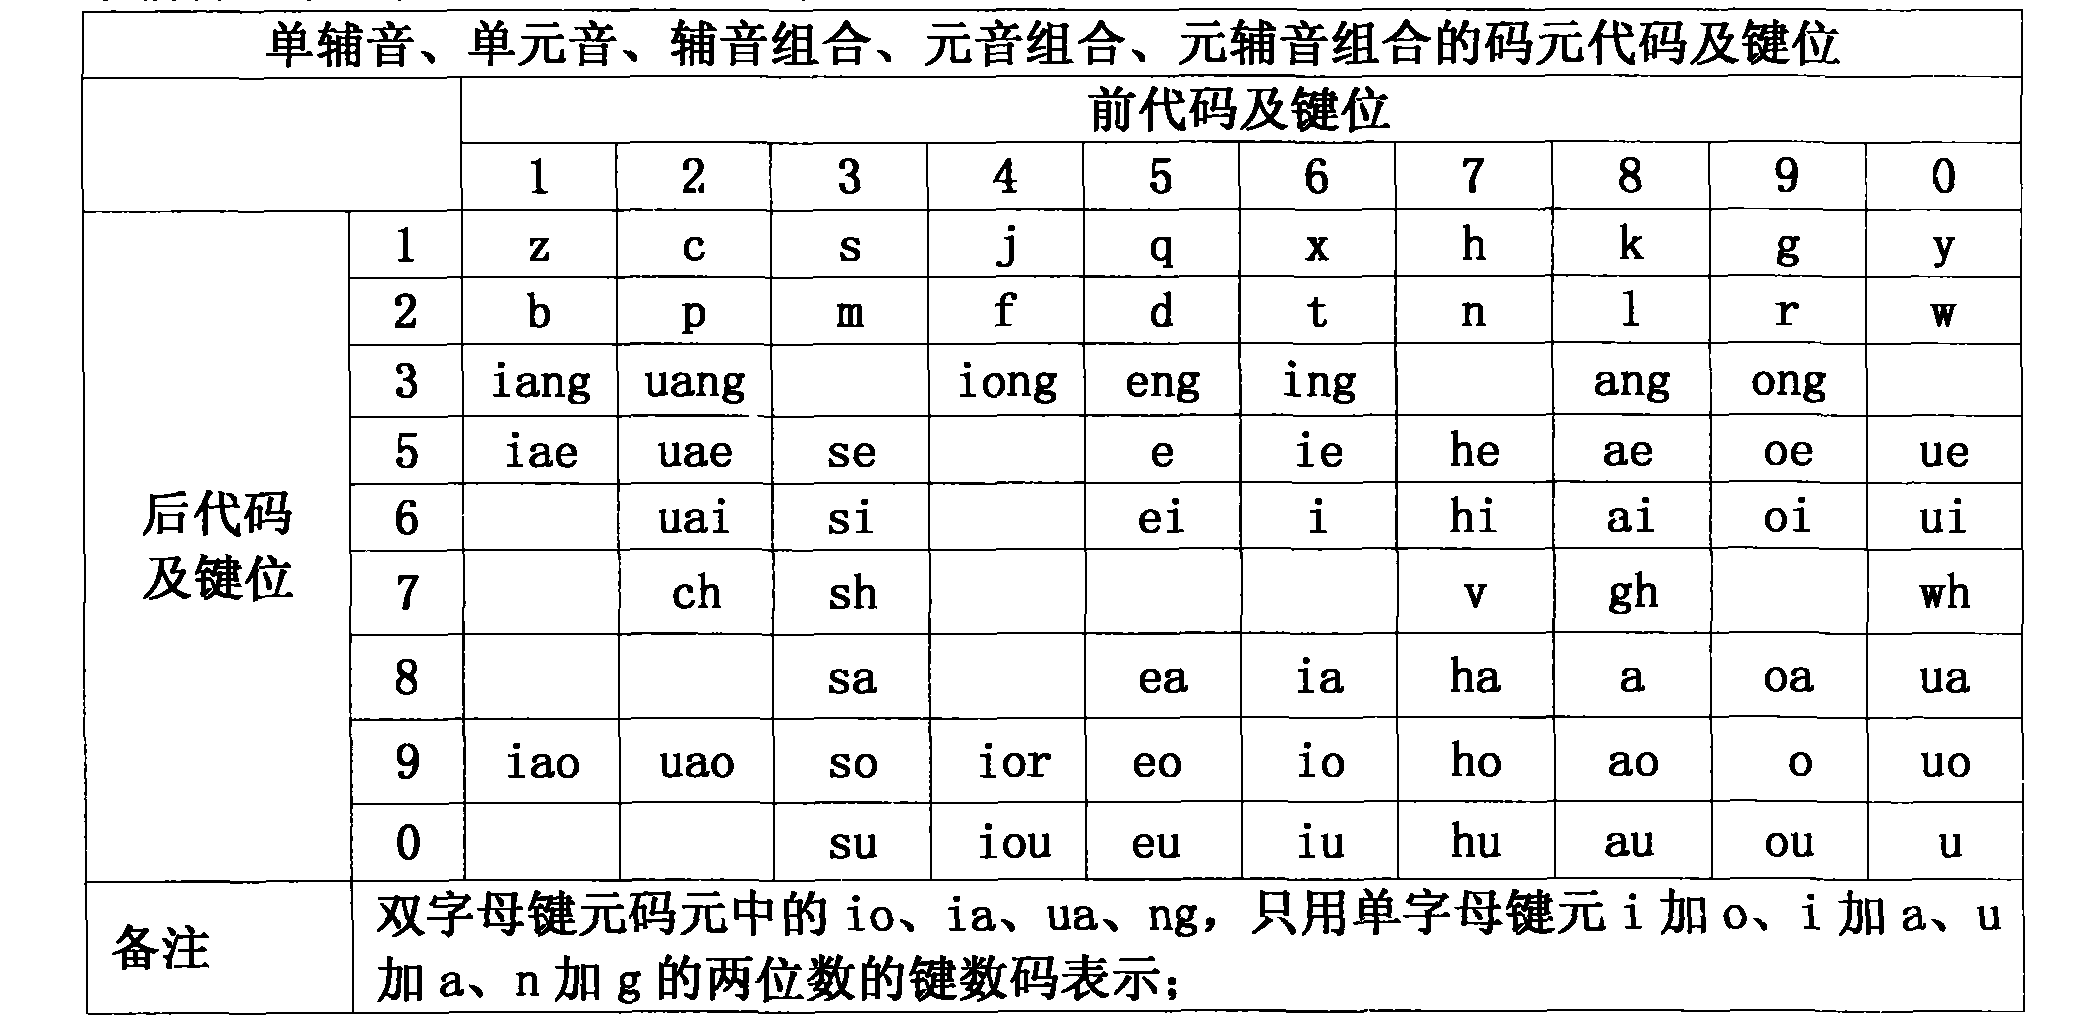 Chinese and English digital input method (30 vocode key-element plan) of common-used keyboard